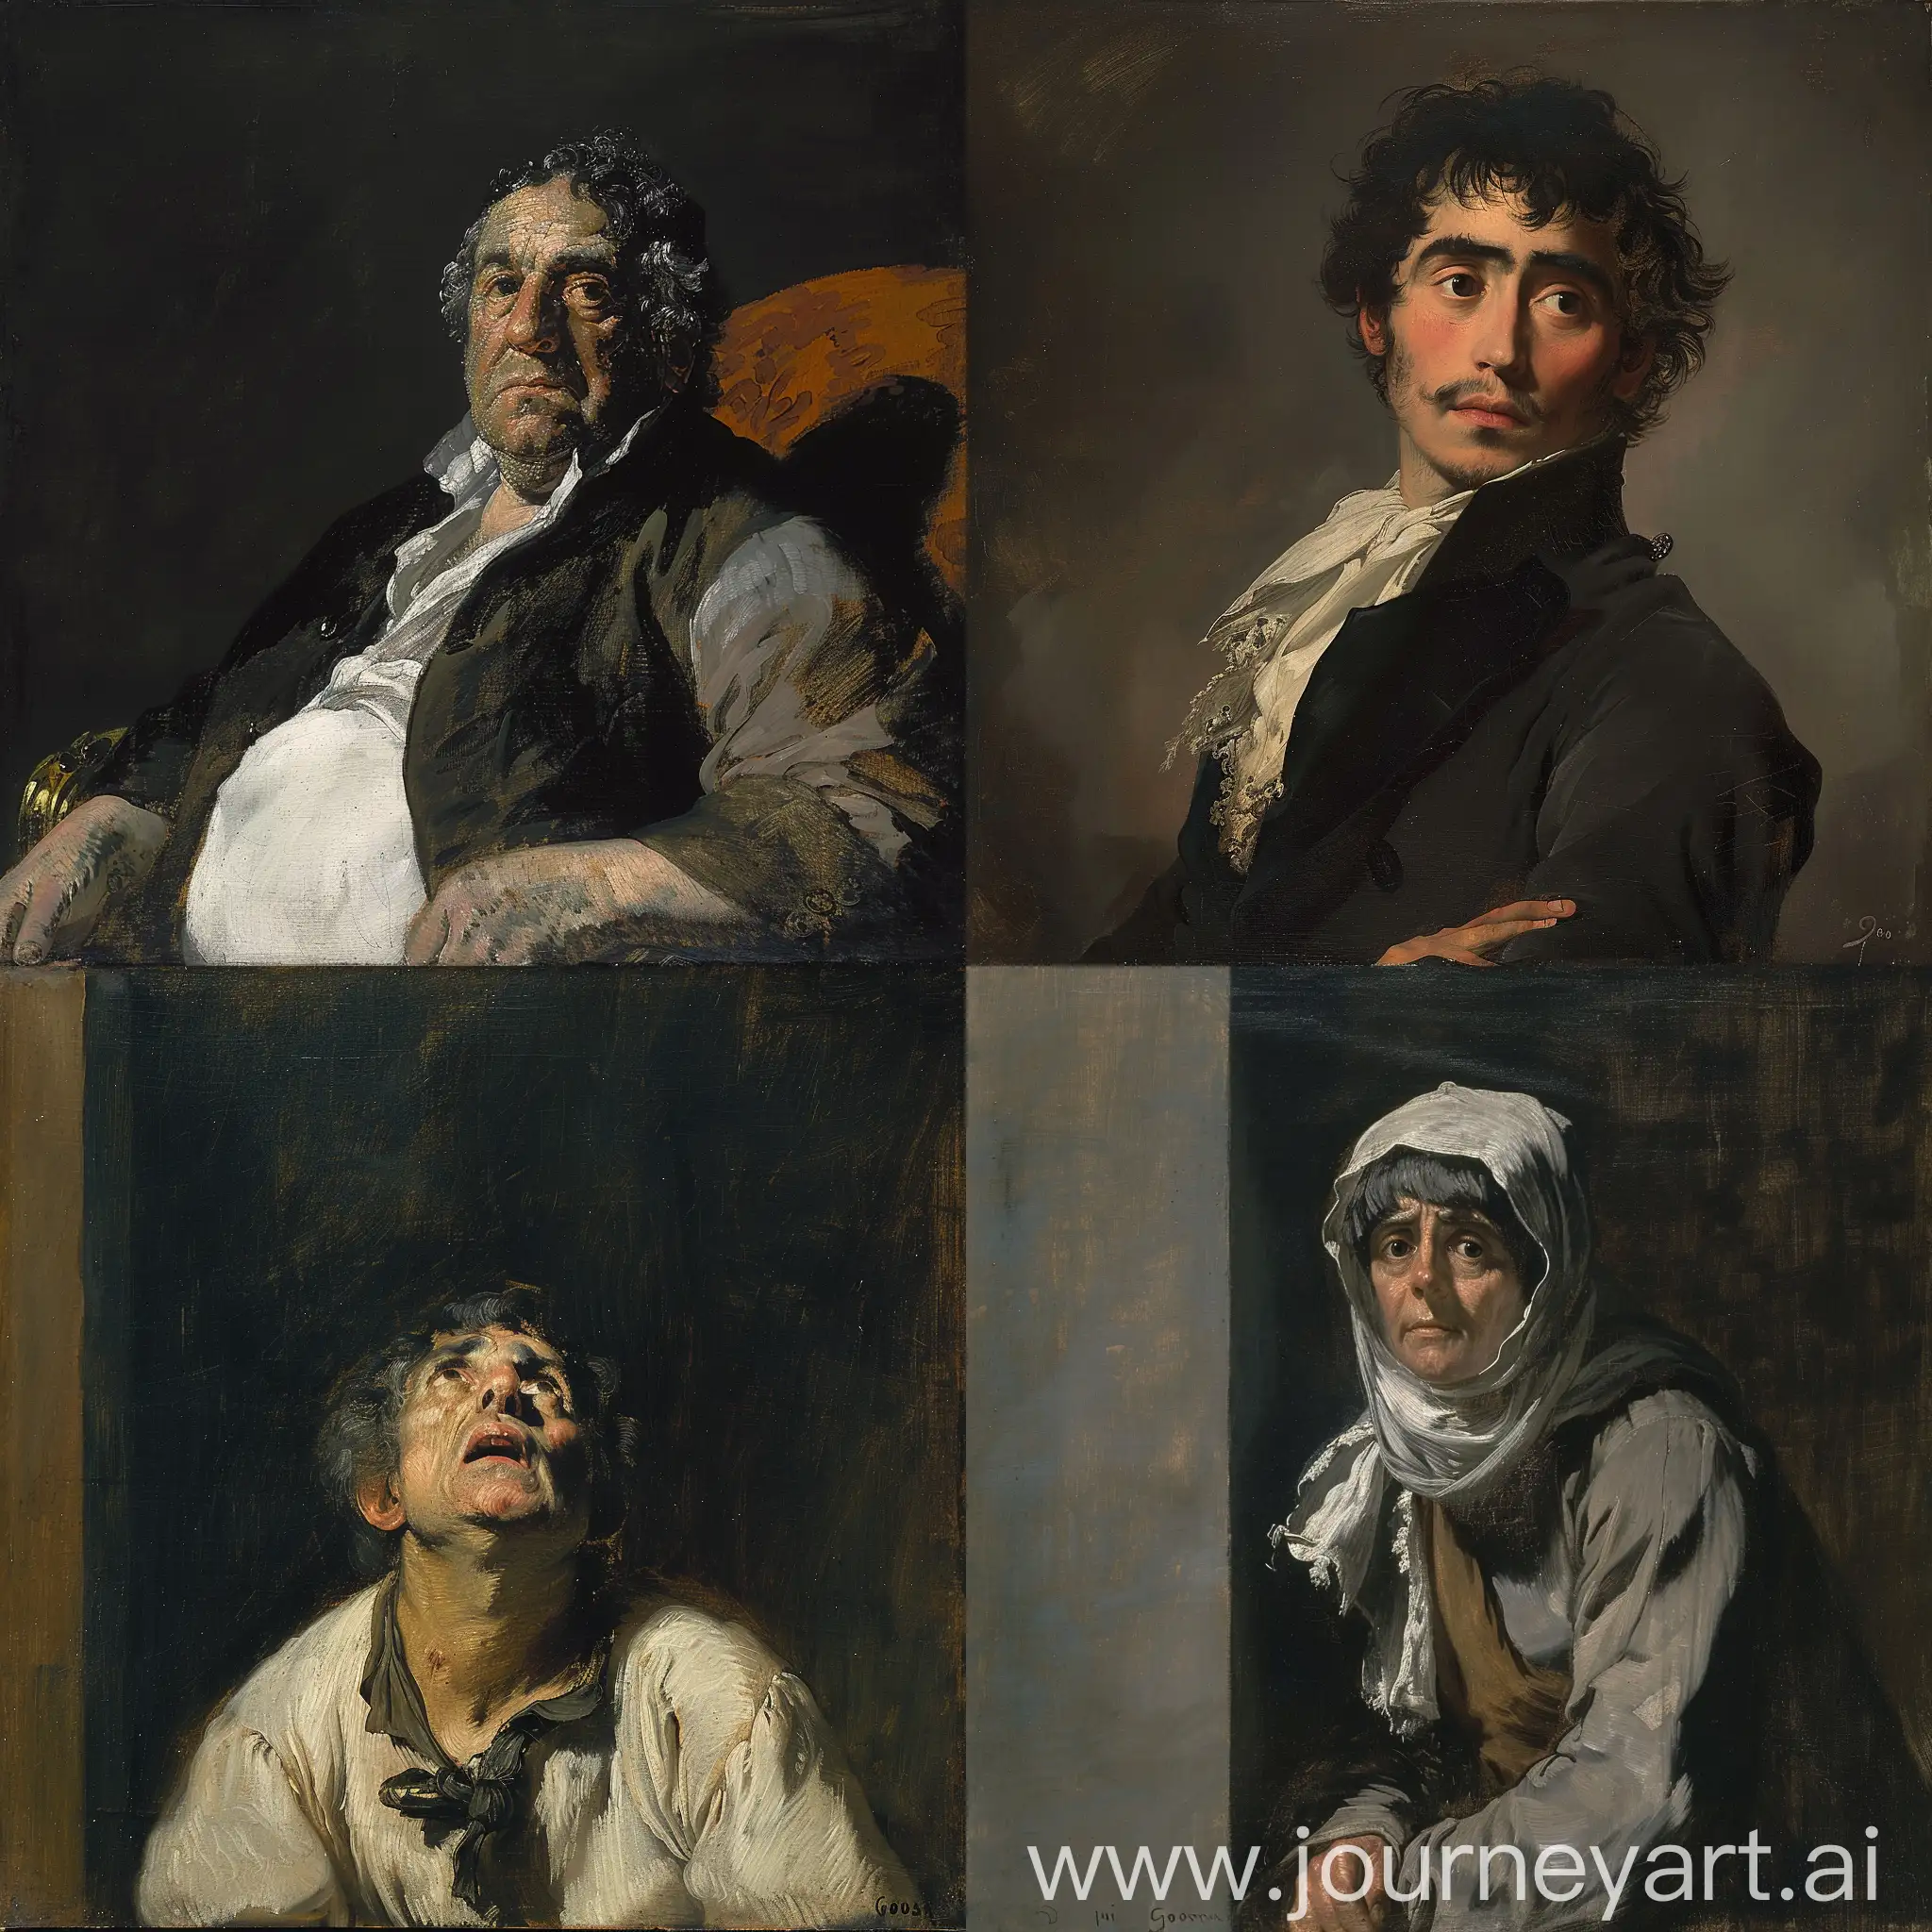 Francisco-Goya-Portrait-Intimate-Closeup-with-Dramatic-Lighting